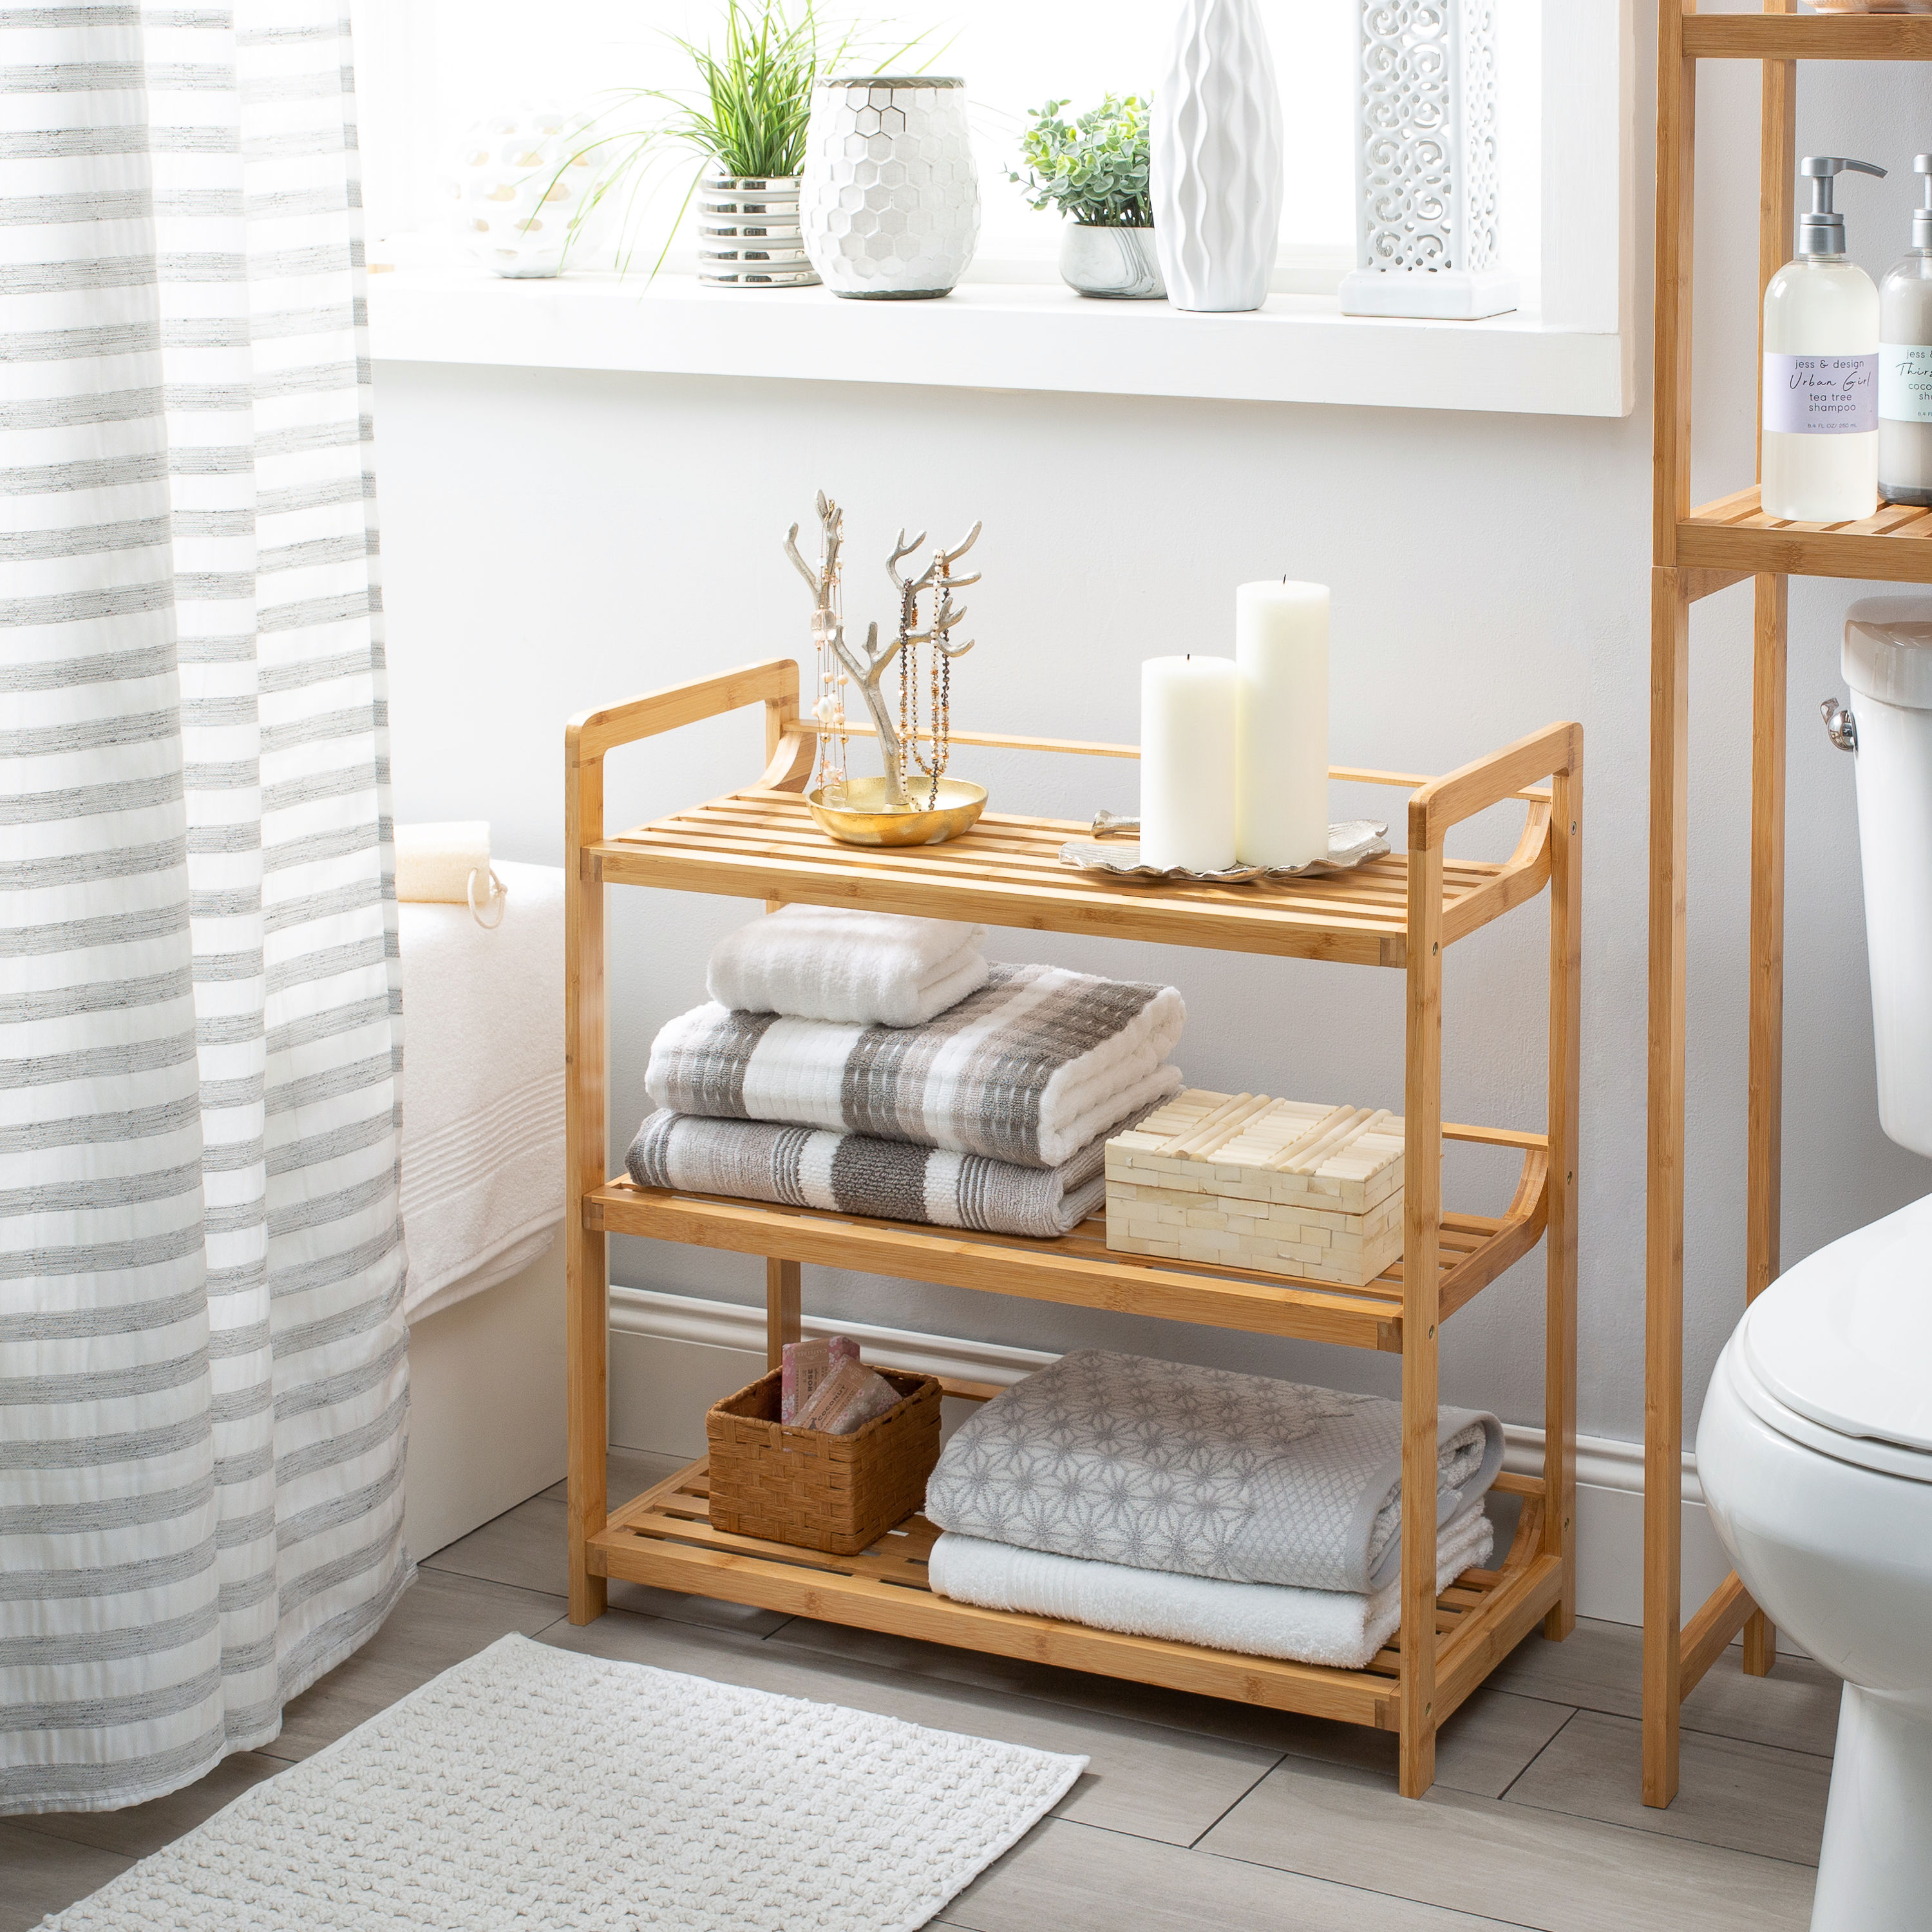 Organize It All Natural 3-Tier Freestanding Bathroom Shelf (27.75-in x ...